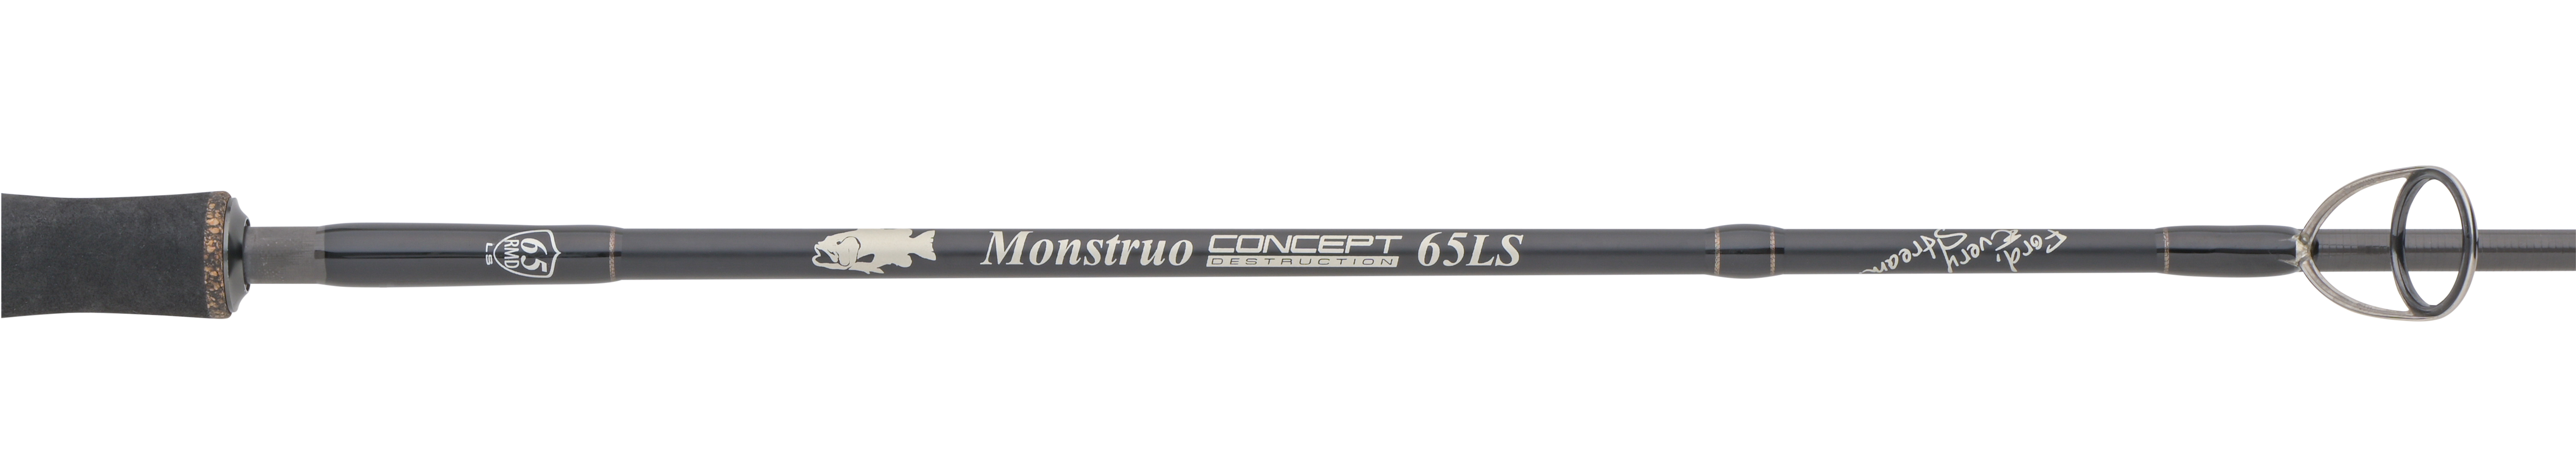 Monstruo”ConceptDestruction” 65LS | ロゴ